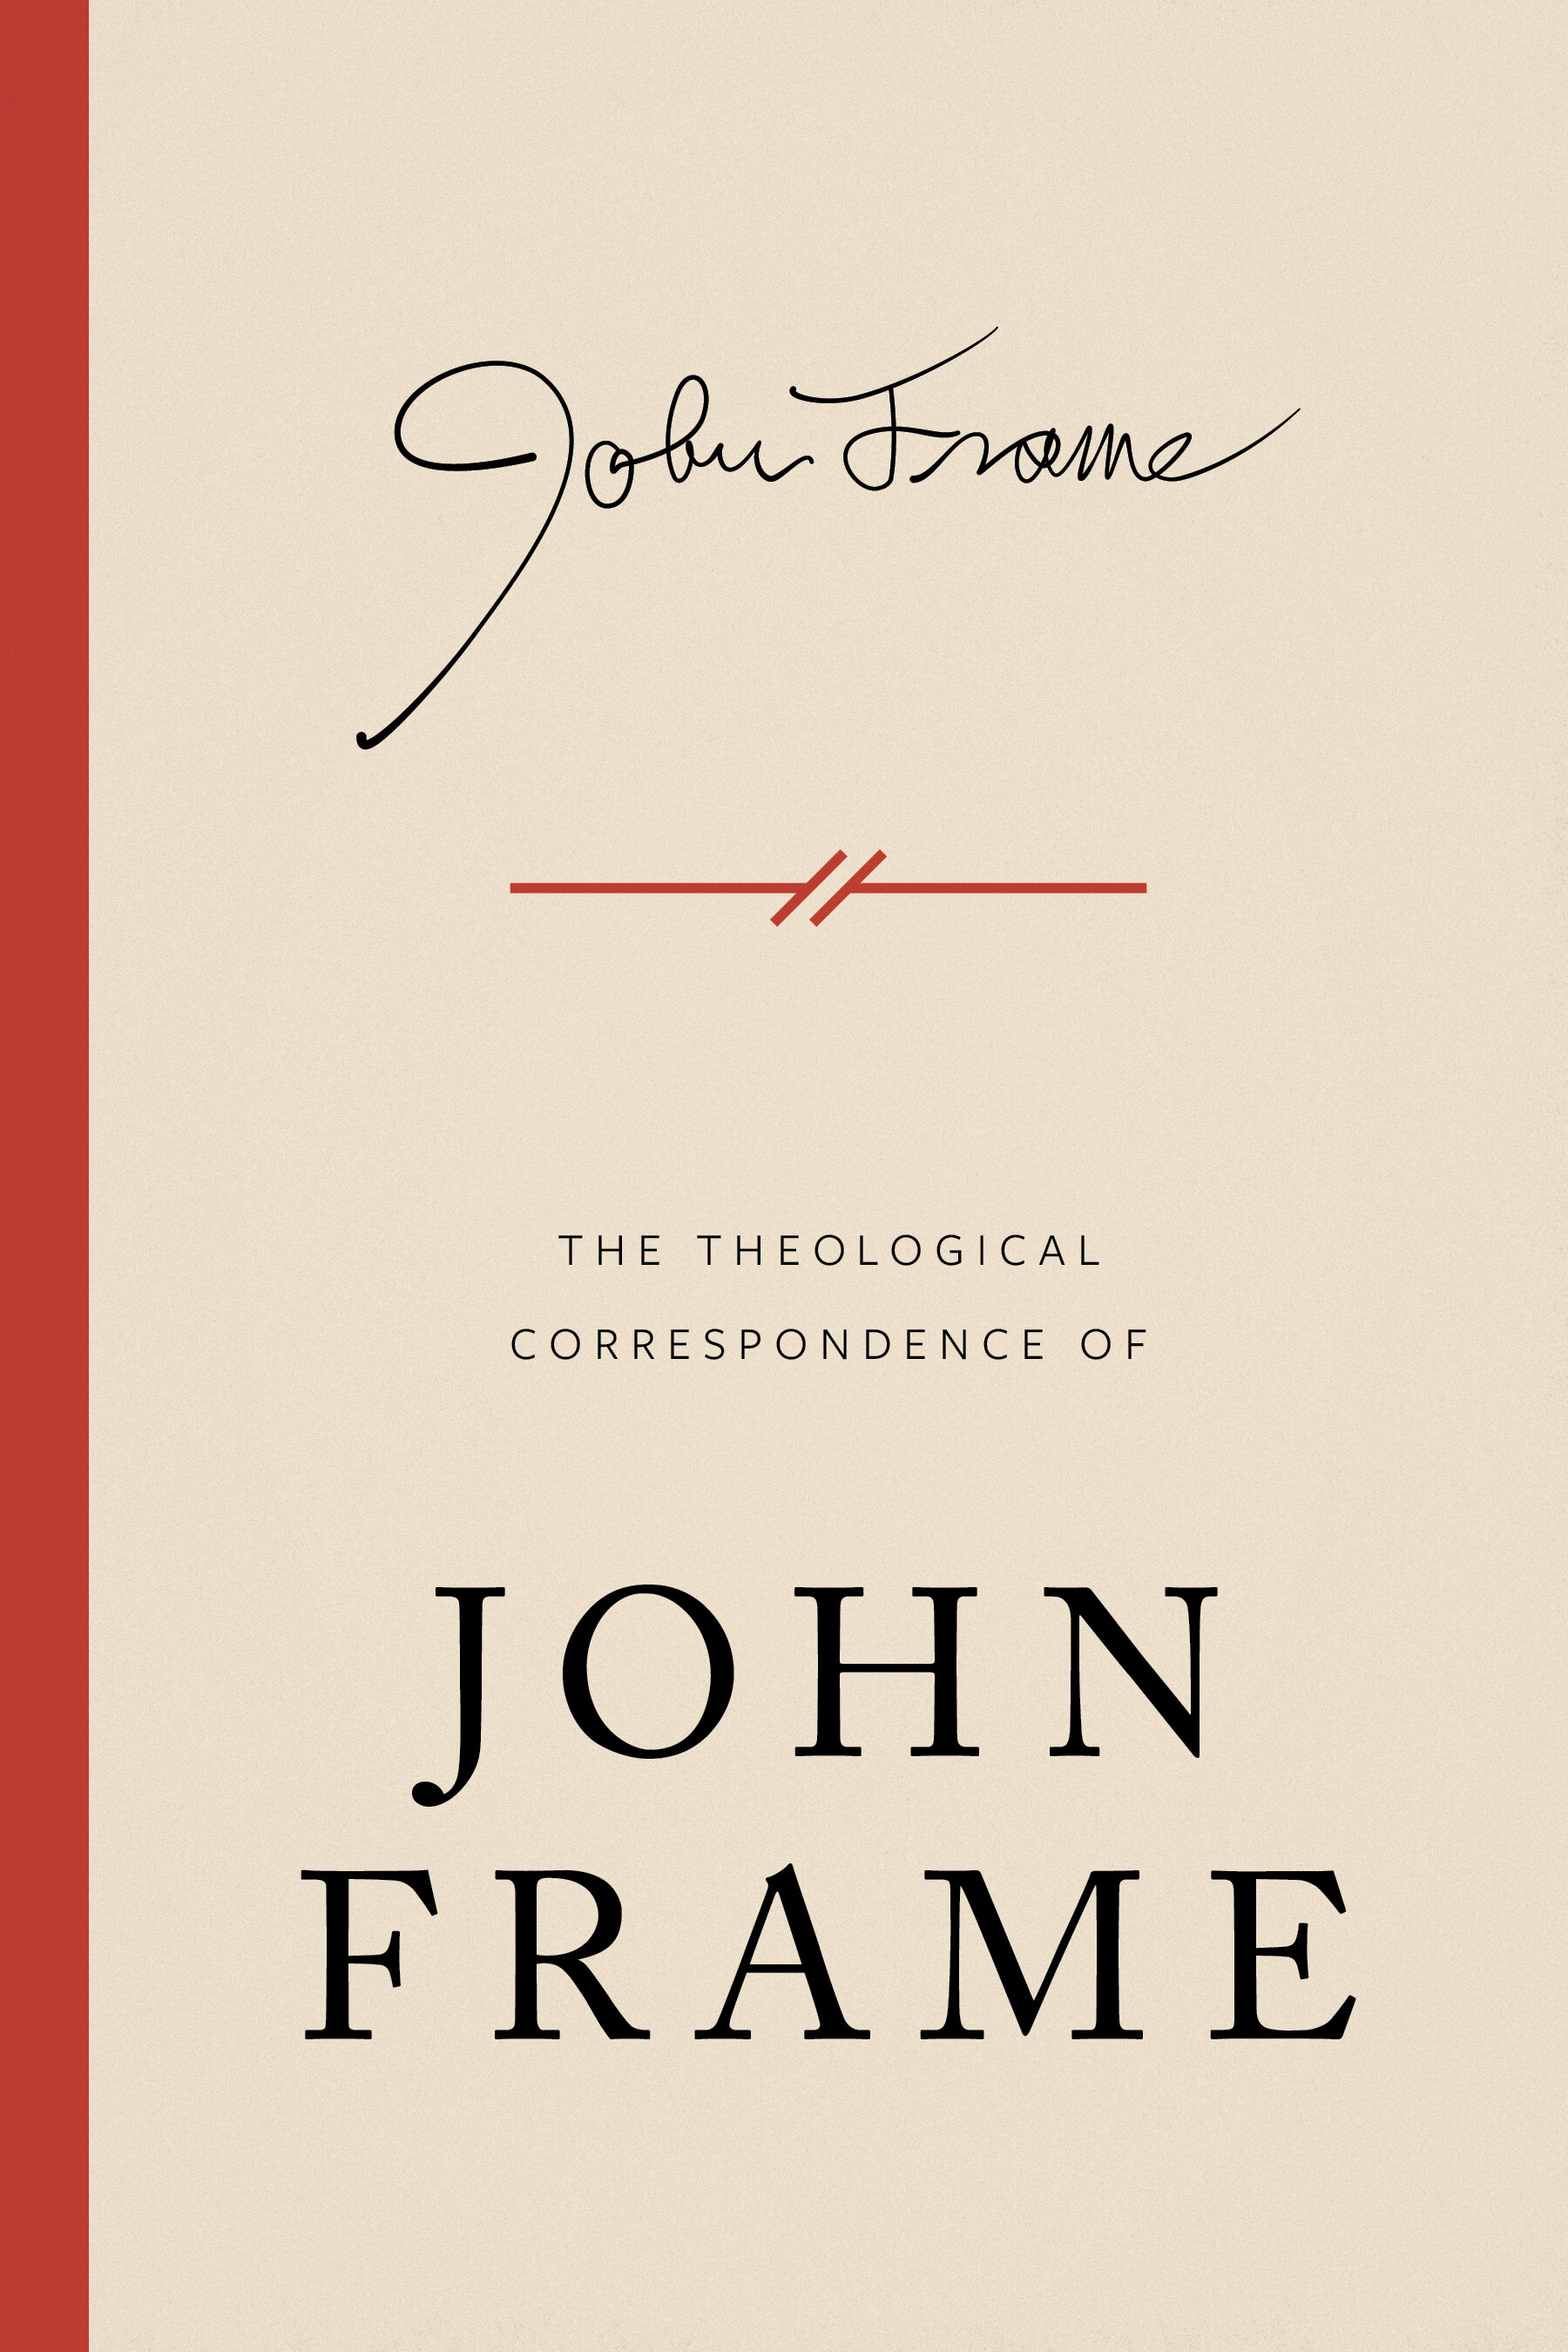 The Theological Correspondence of John Frame